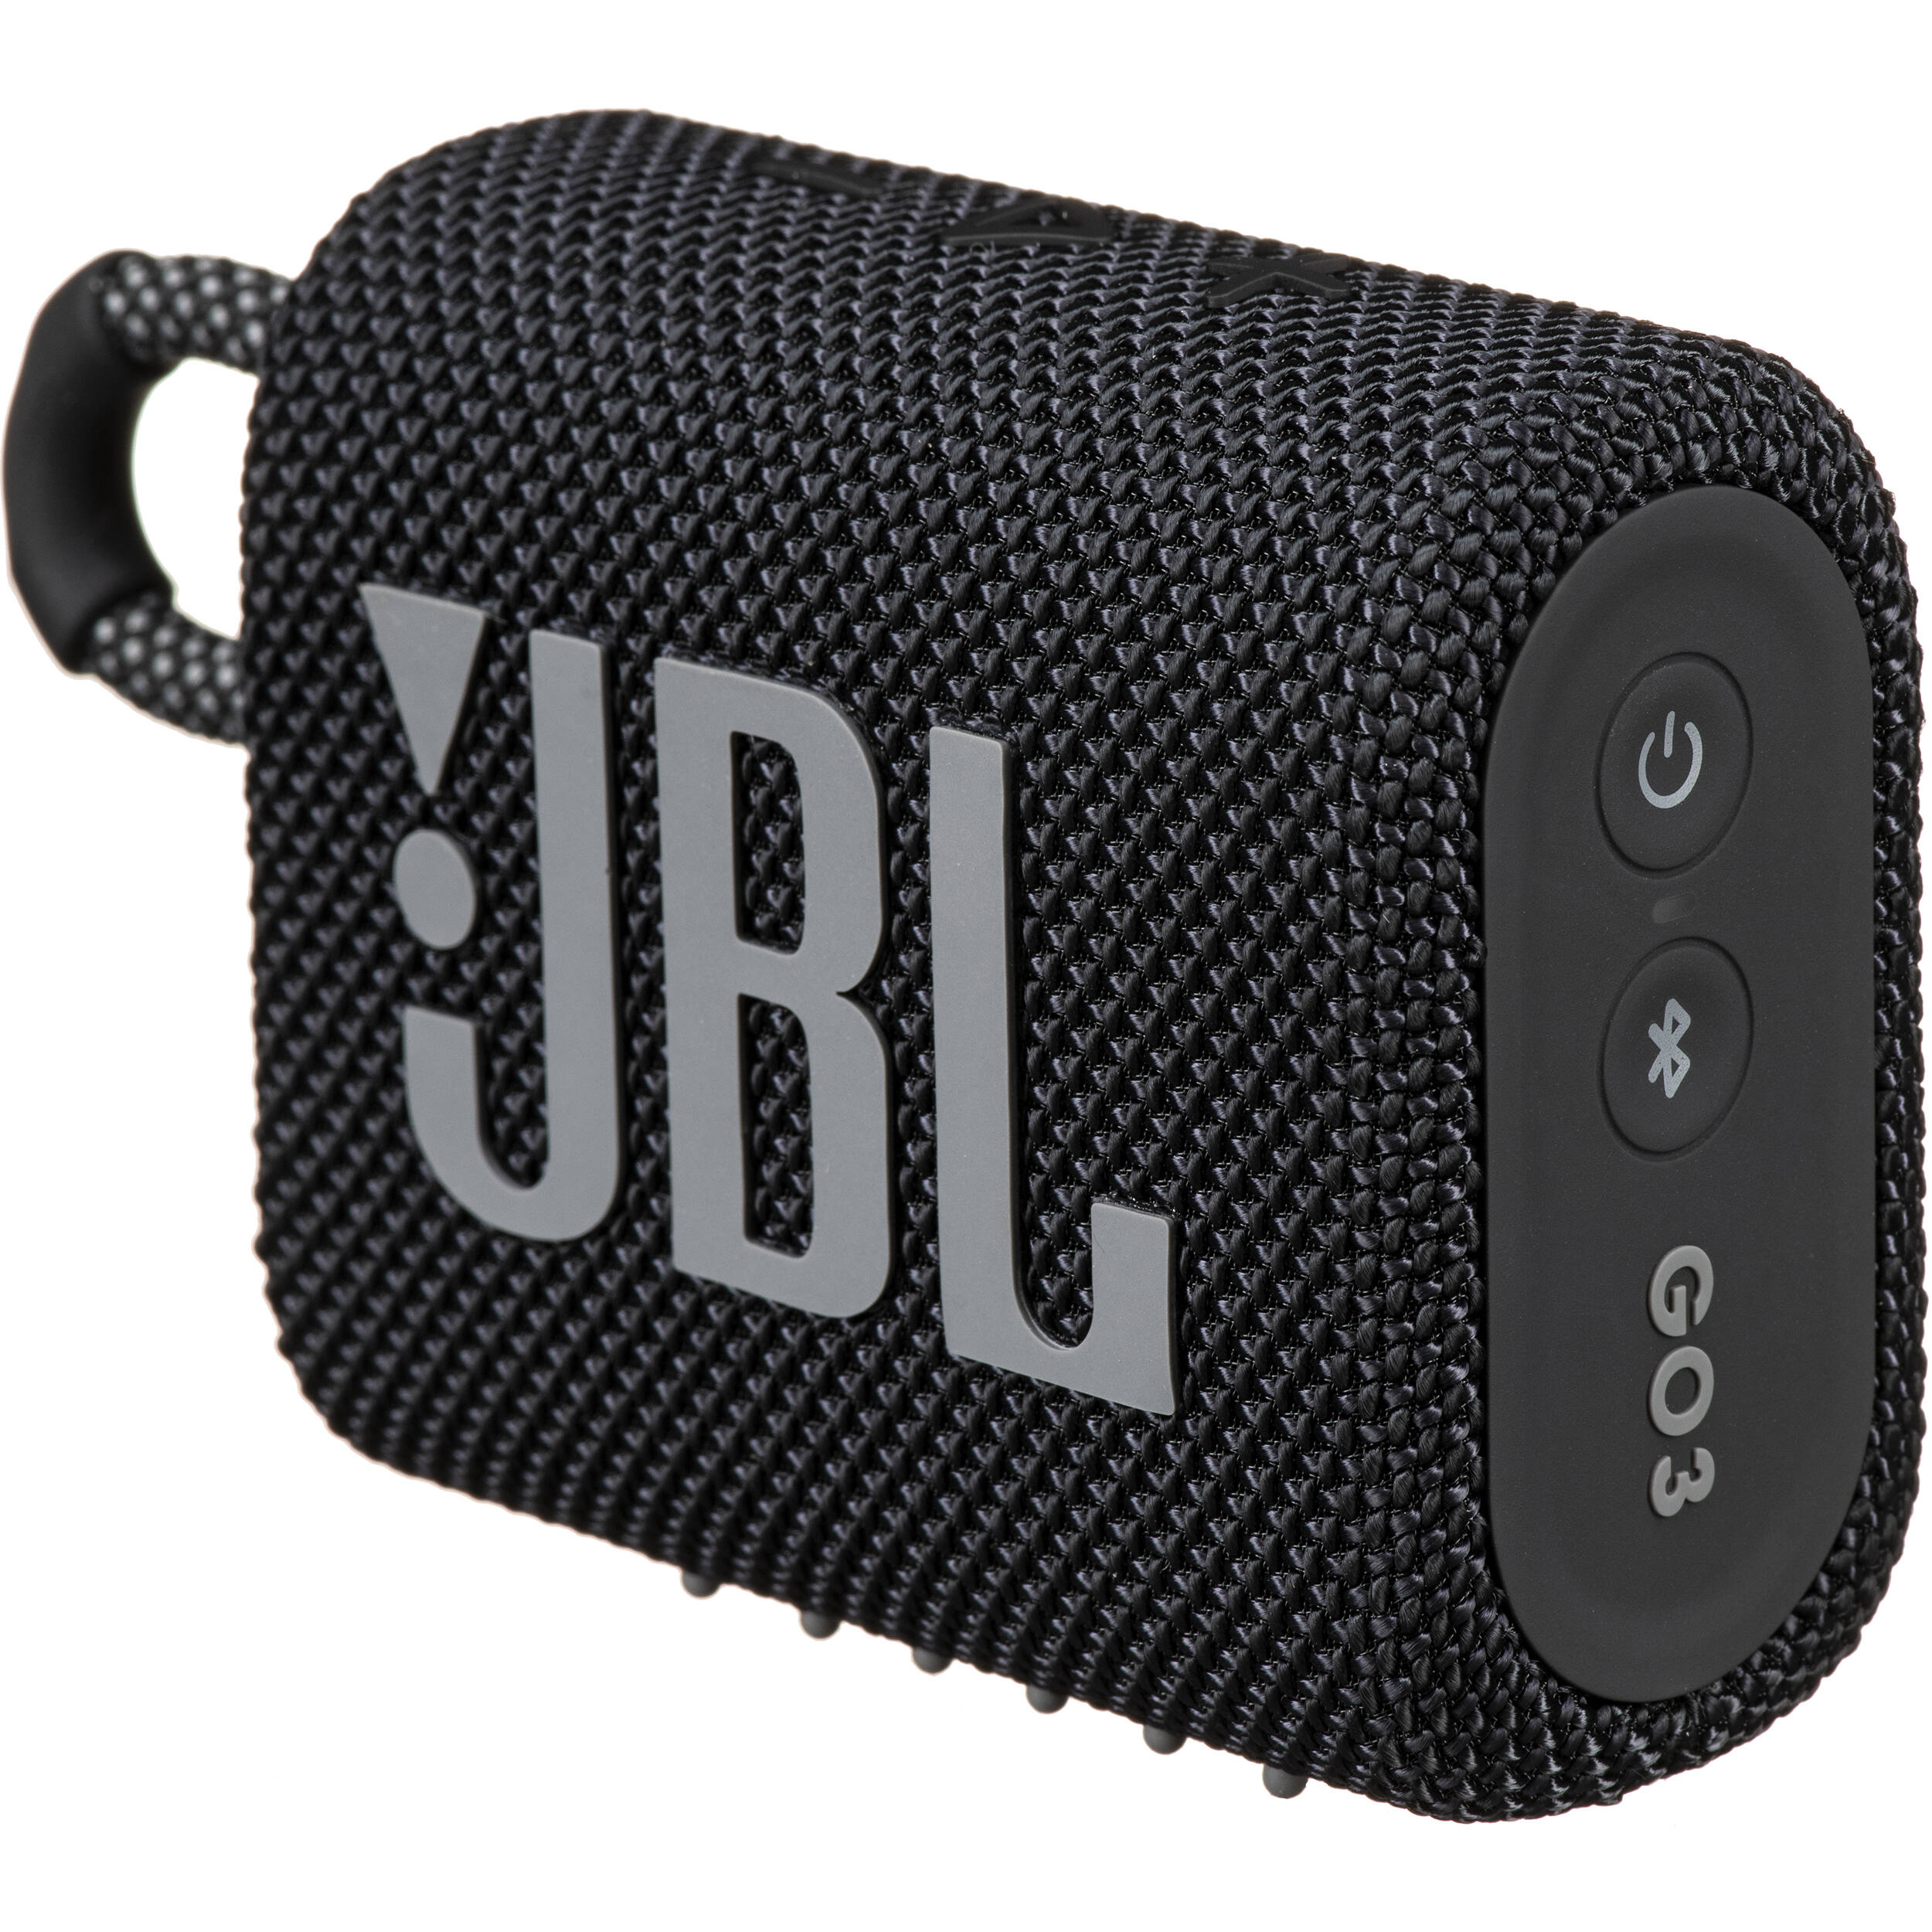 Jbl go оригинал. Bluetooth JBL go. Колонка JBL go Black. Портативная акустика JBL go 3 черный. Колонка JBL go 3 серая.